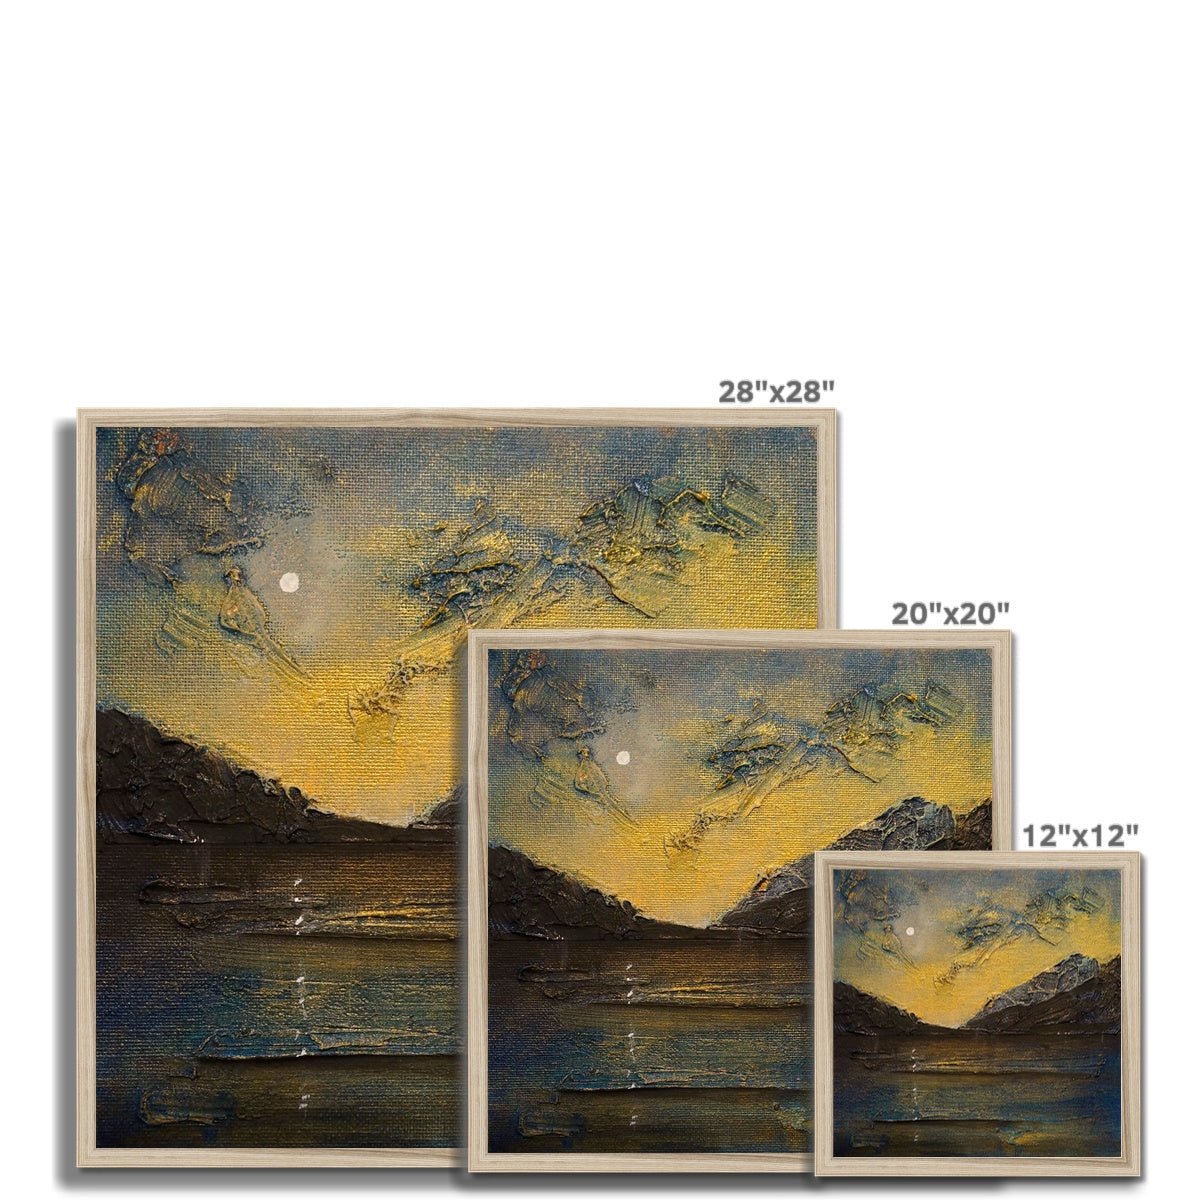 Loch Lomond Moonlight Painting | Framed Prints From Scotland-Framed Prints-Scottish Lochs & Mountains Art Gallery-Paintings, Prints, Homeware, Art Gifts From Scotland By Scottish Artist Kevin Hunter